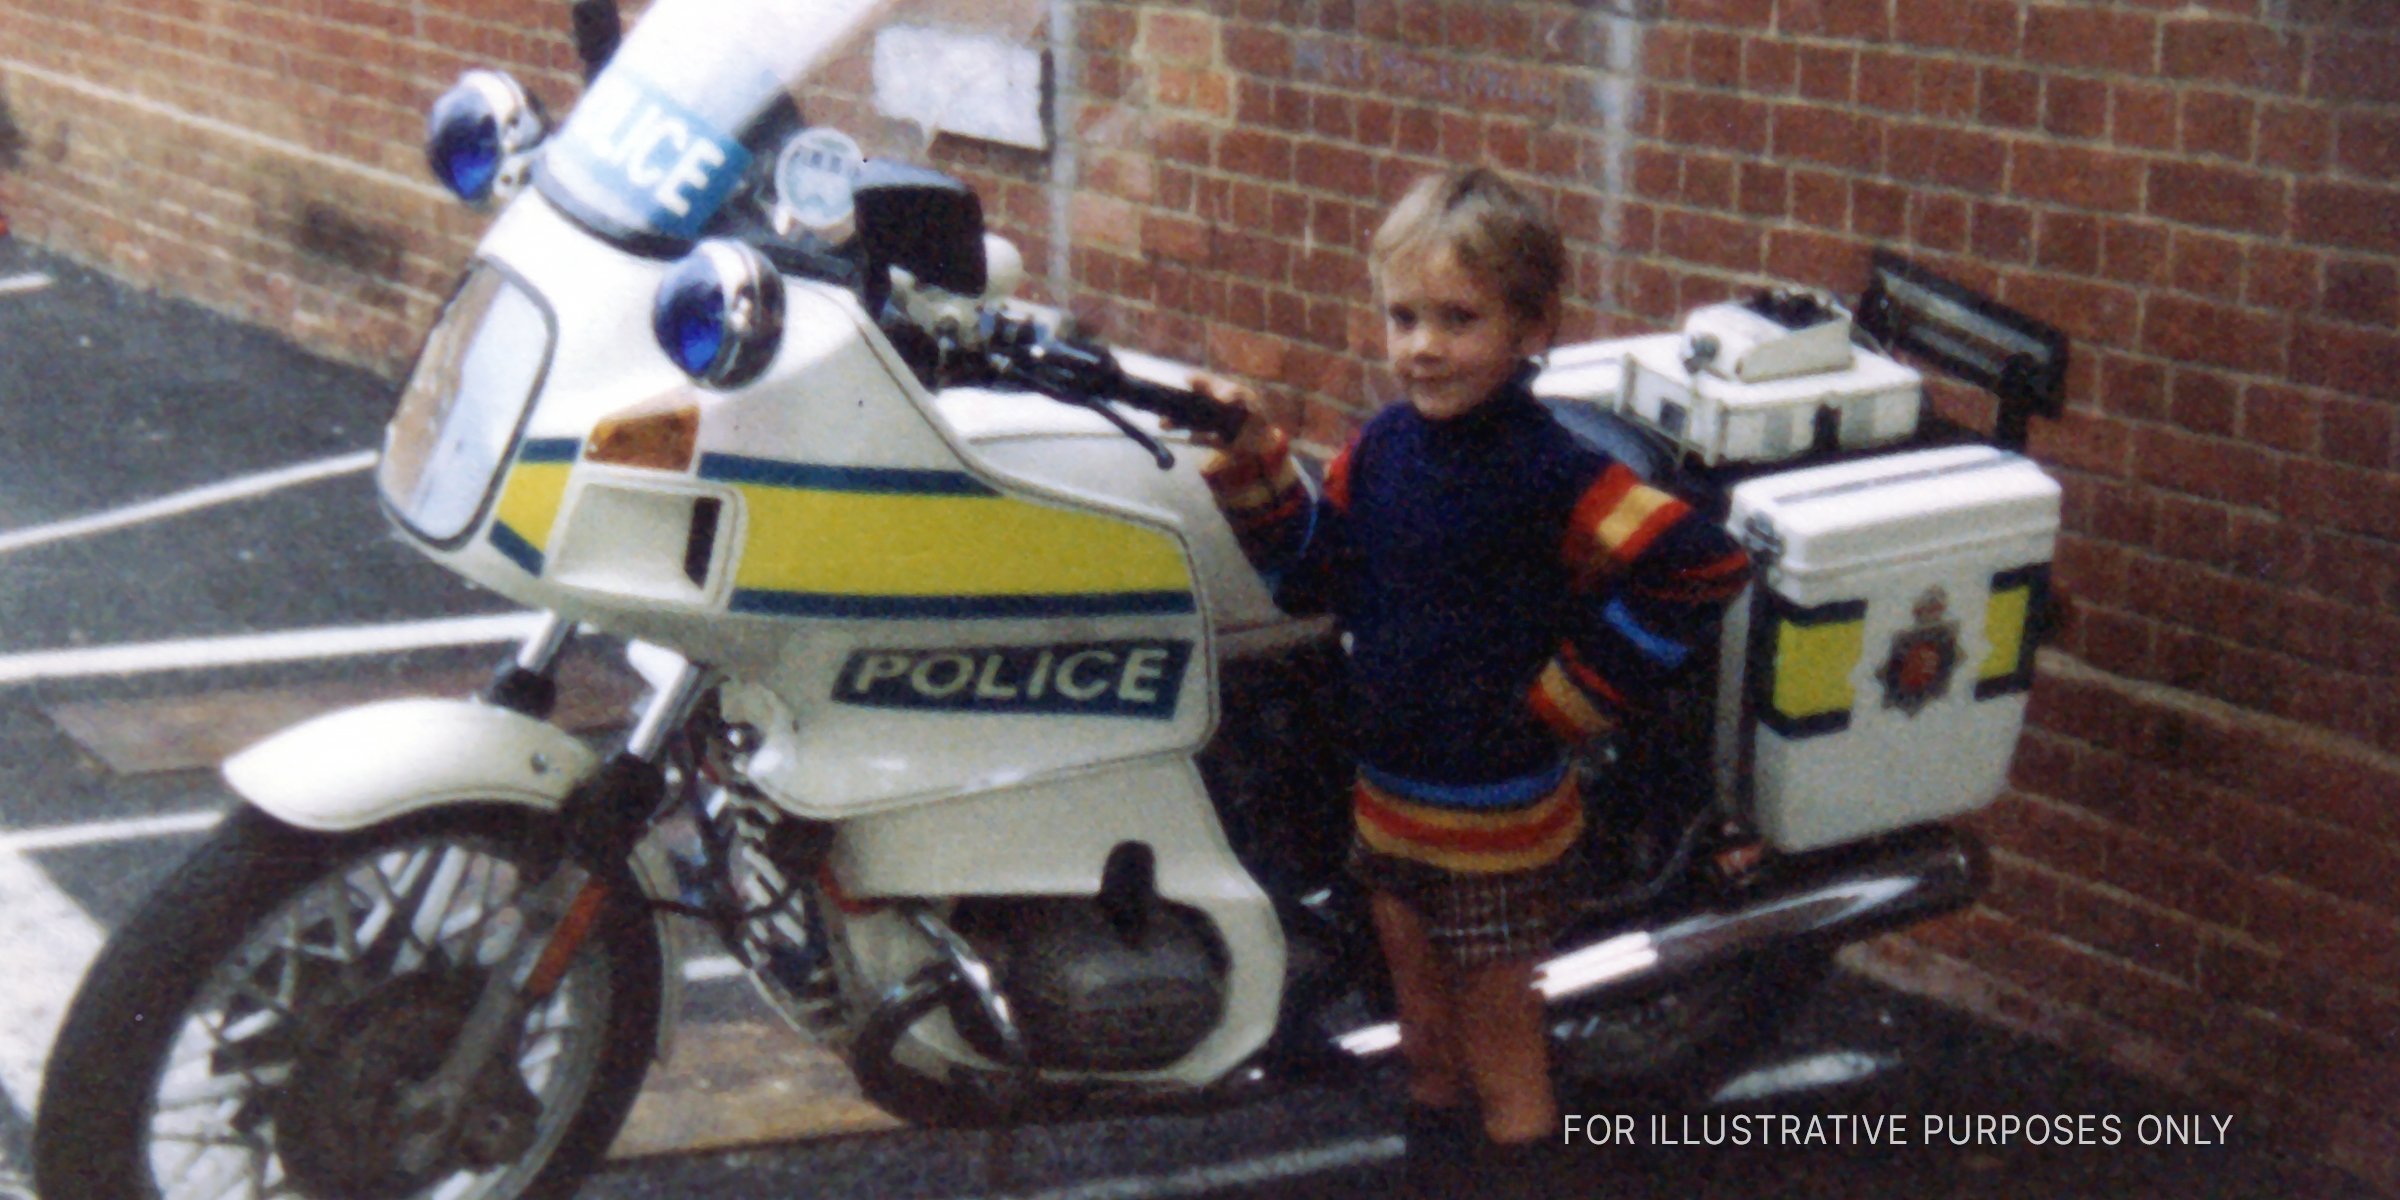 Child next to police bike | Source: Flickr / simon_music (CC BY-SA 2.0)